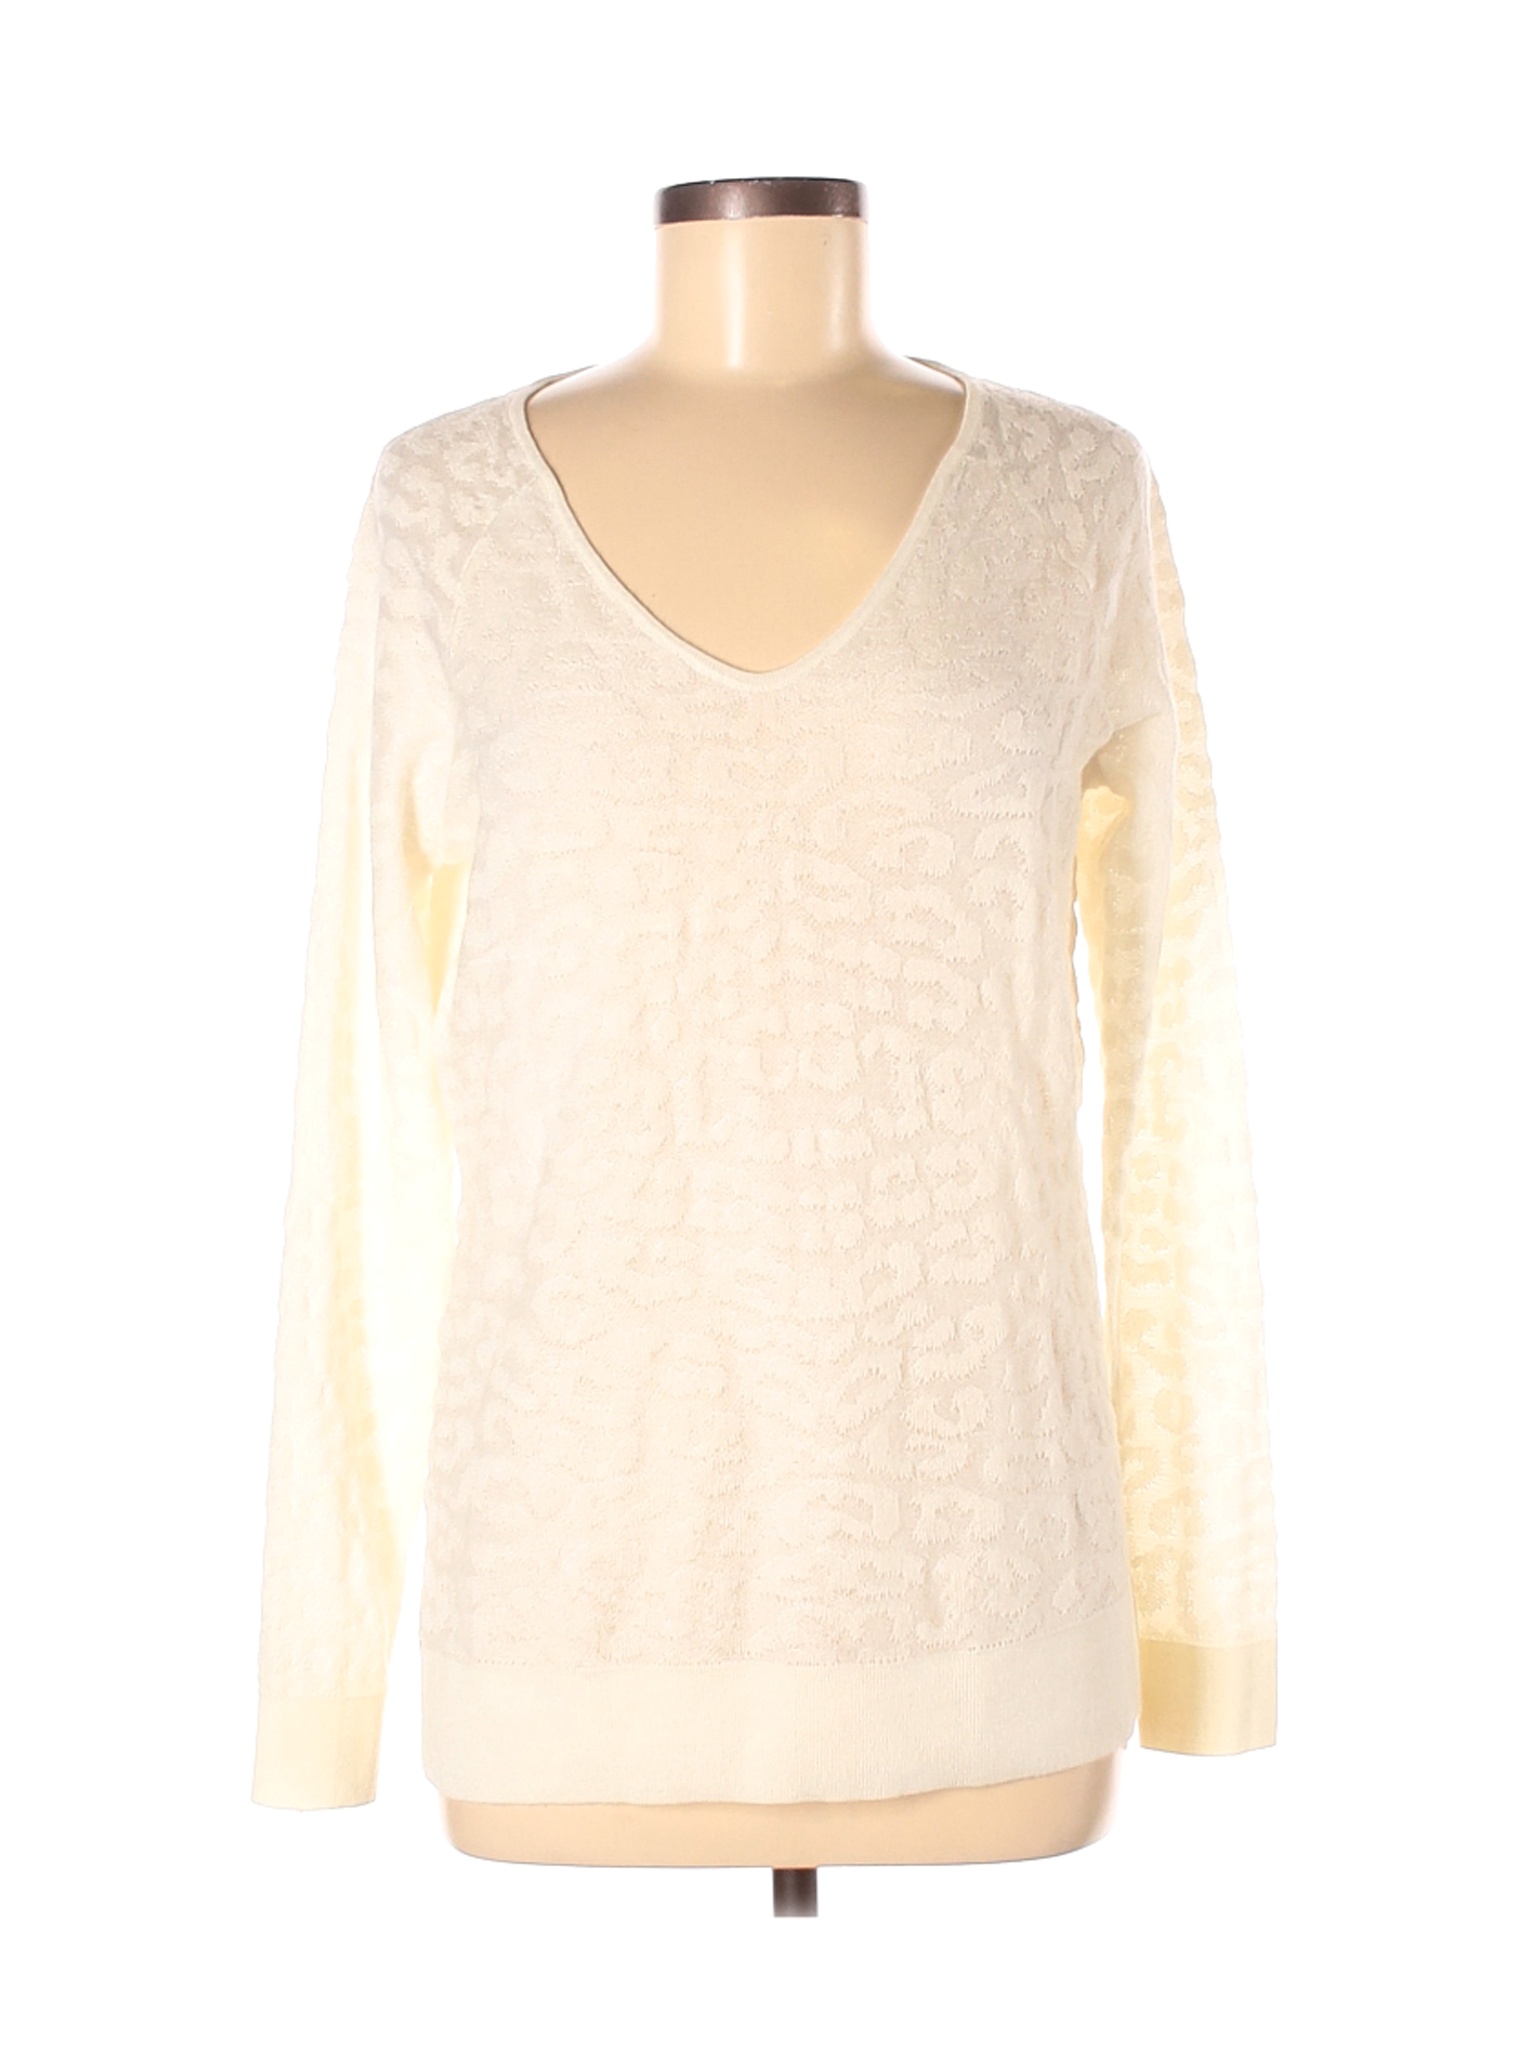 Ann Taylor LOFT Women Ivory Pullover Sweater M | eBay